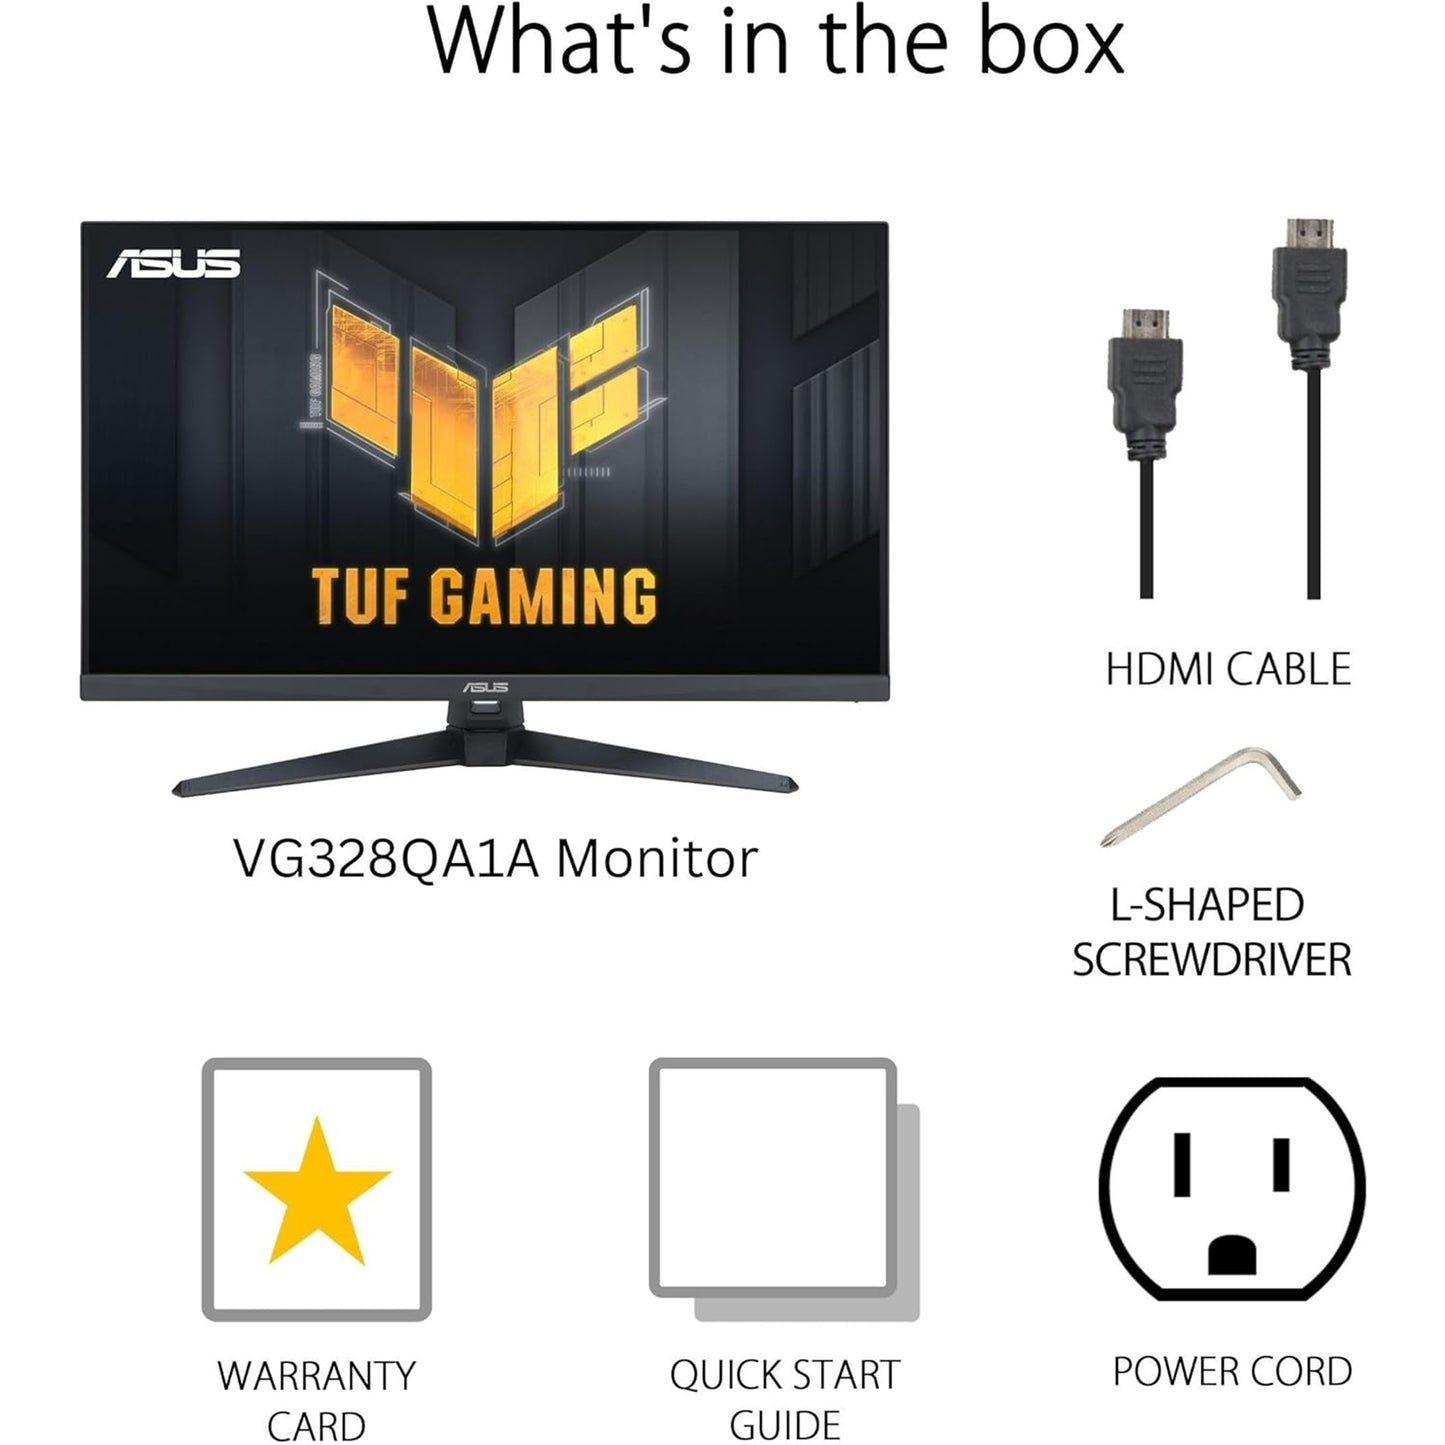 ASUS TUF Gaming 32” (31.5-inch viewable) 1080P Gaming Monitor (VG328QA1A) - Full HD, 170Hz, 1ms, Extreme Low Motion Blur, FreeSync Premium, Eye Care, Shadow Boost, HDMI, Tilt Adjustable,Black